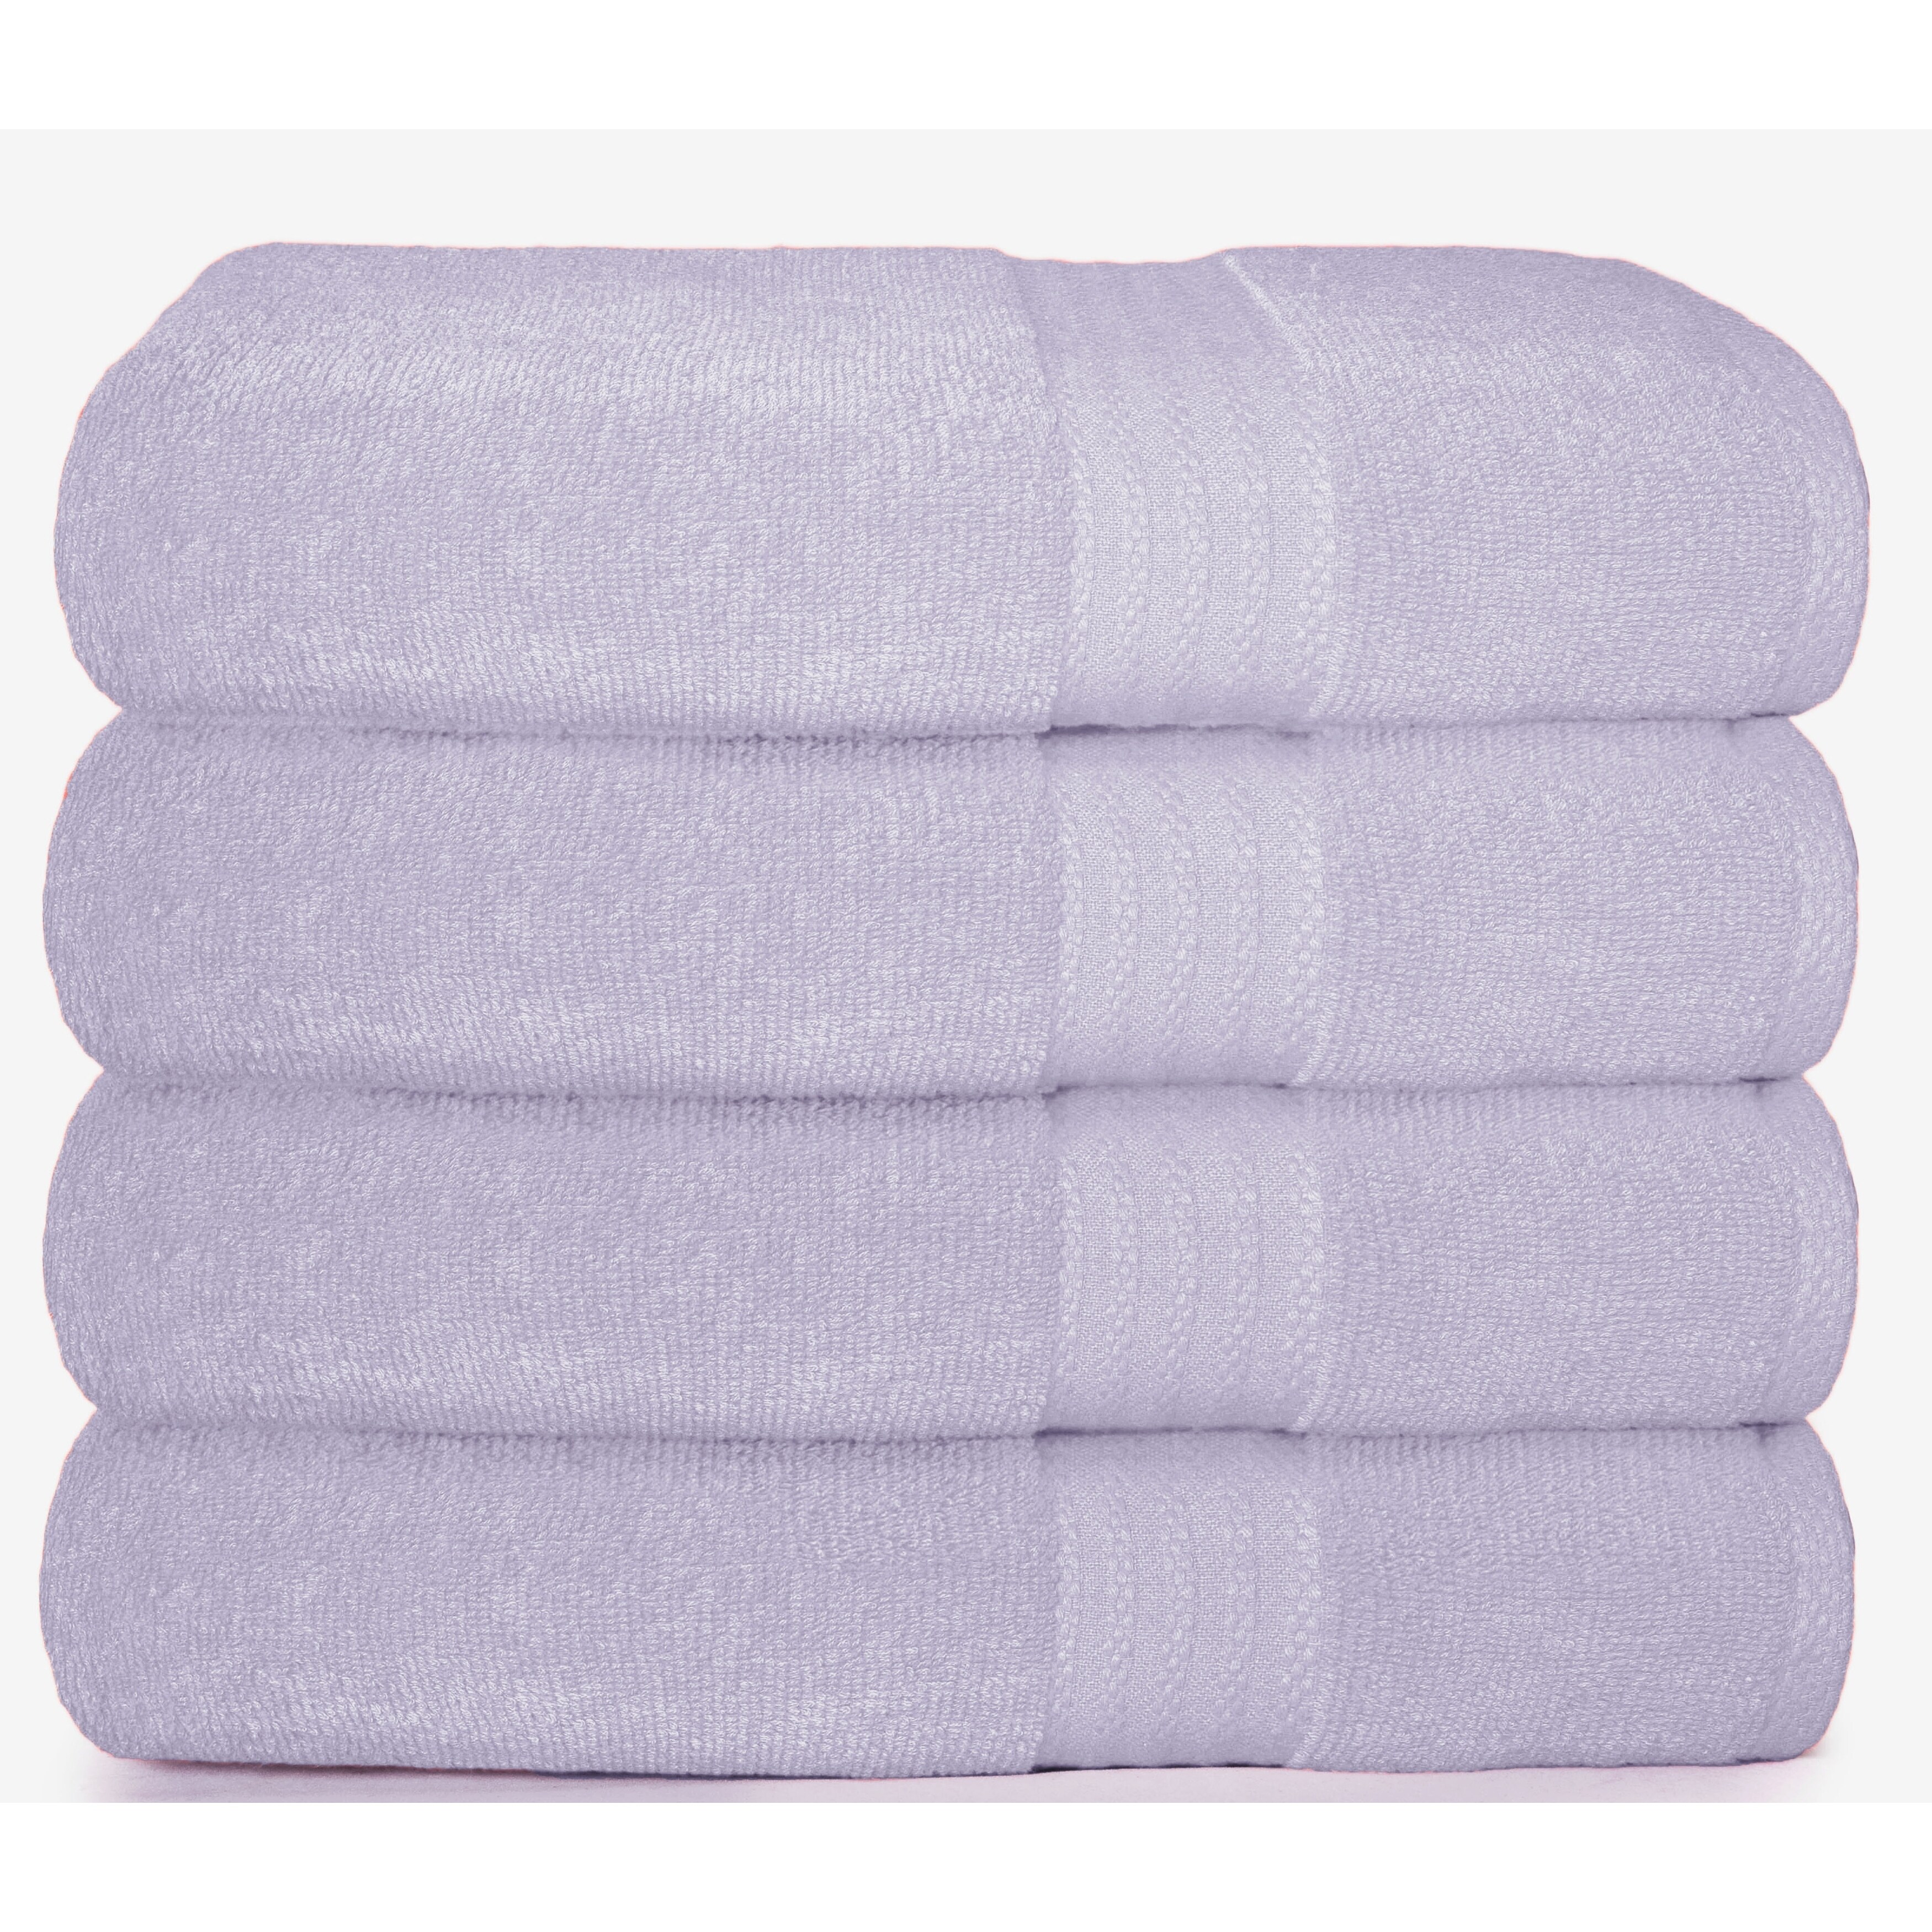 https://ak1.ostkcdn.com/images/products/30363975/Glamburg-Premium-Cotton-4-Pack-Bath-Towel-Set-100-Pure-Cotton-4-Bath-Towels-27x54-Ultra-Soft-Highly-Absorbent-4b998d71-bfc7-420b-8ee8-fc28db6a159f.jpg